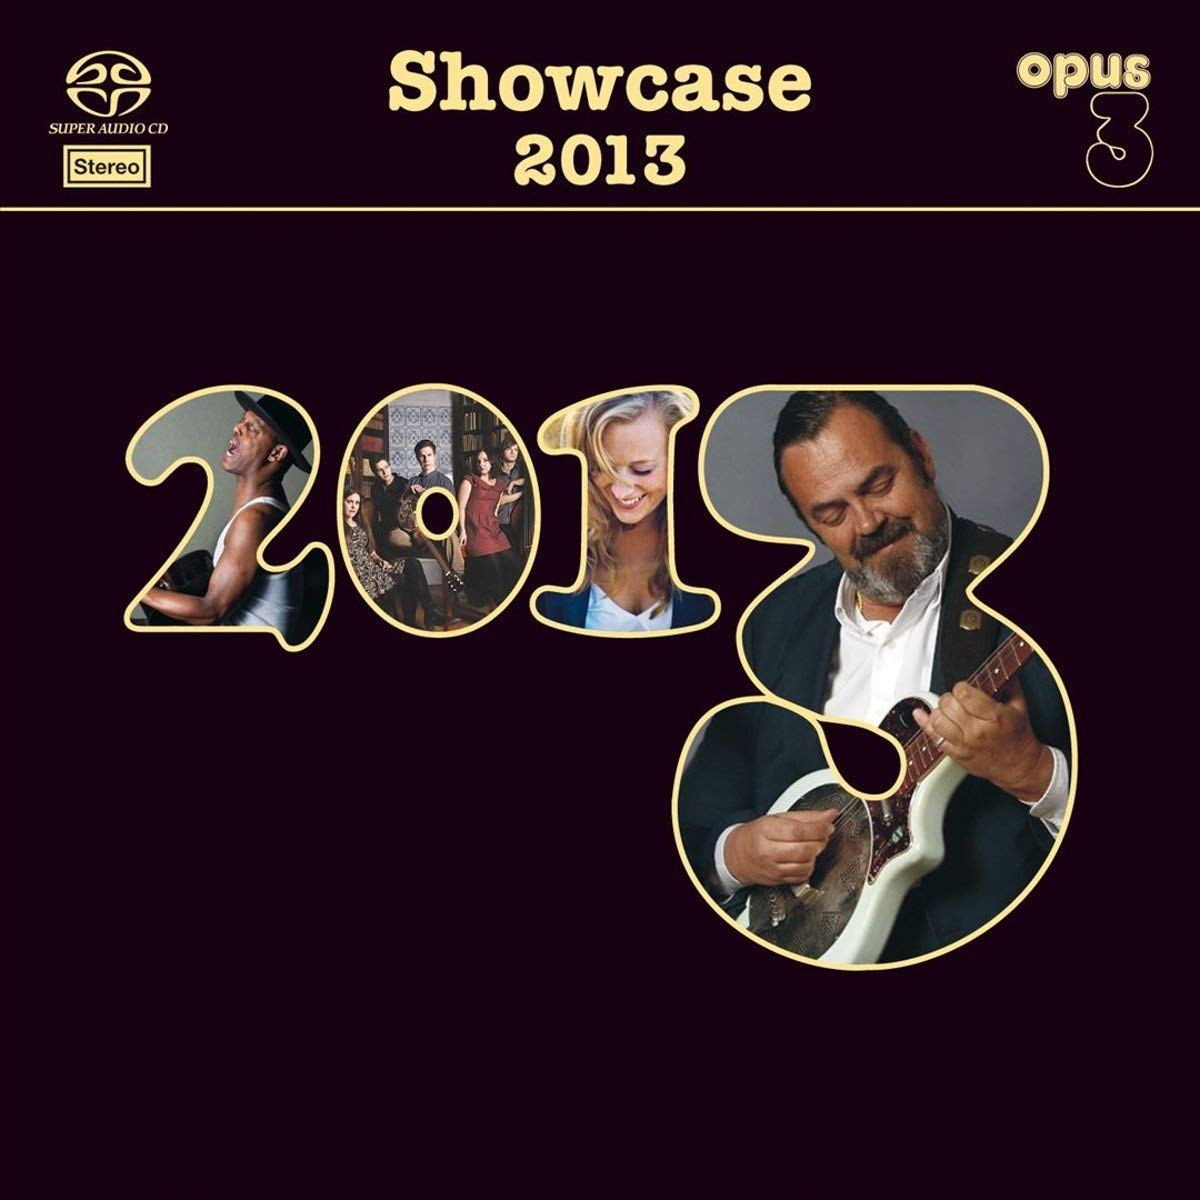 Various Artists - Opus 3: Showcase 2013 (2013) SACD ISO + DSF DSD64 + FLAC 24bit/96kHz